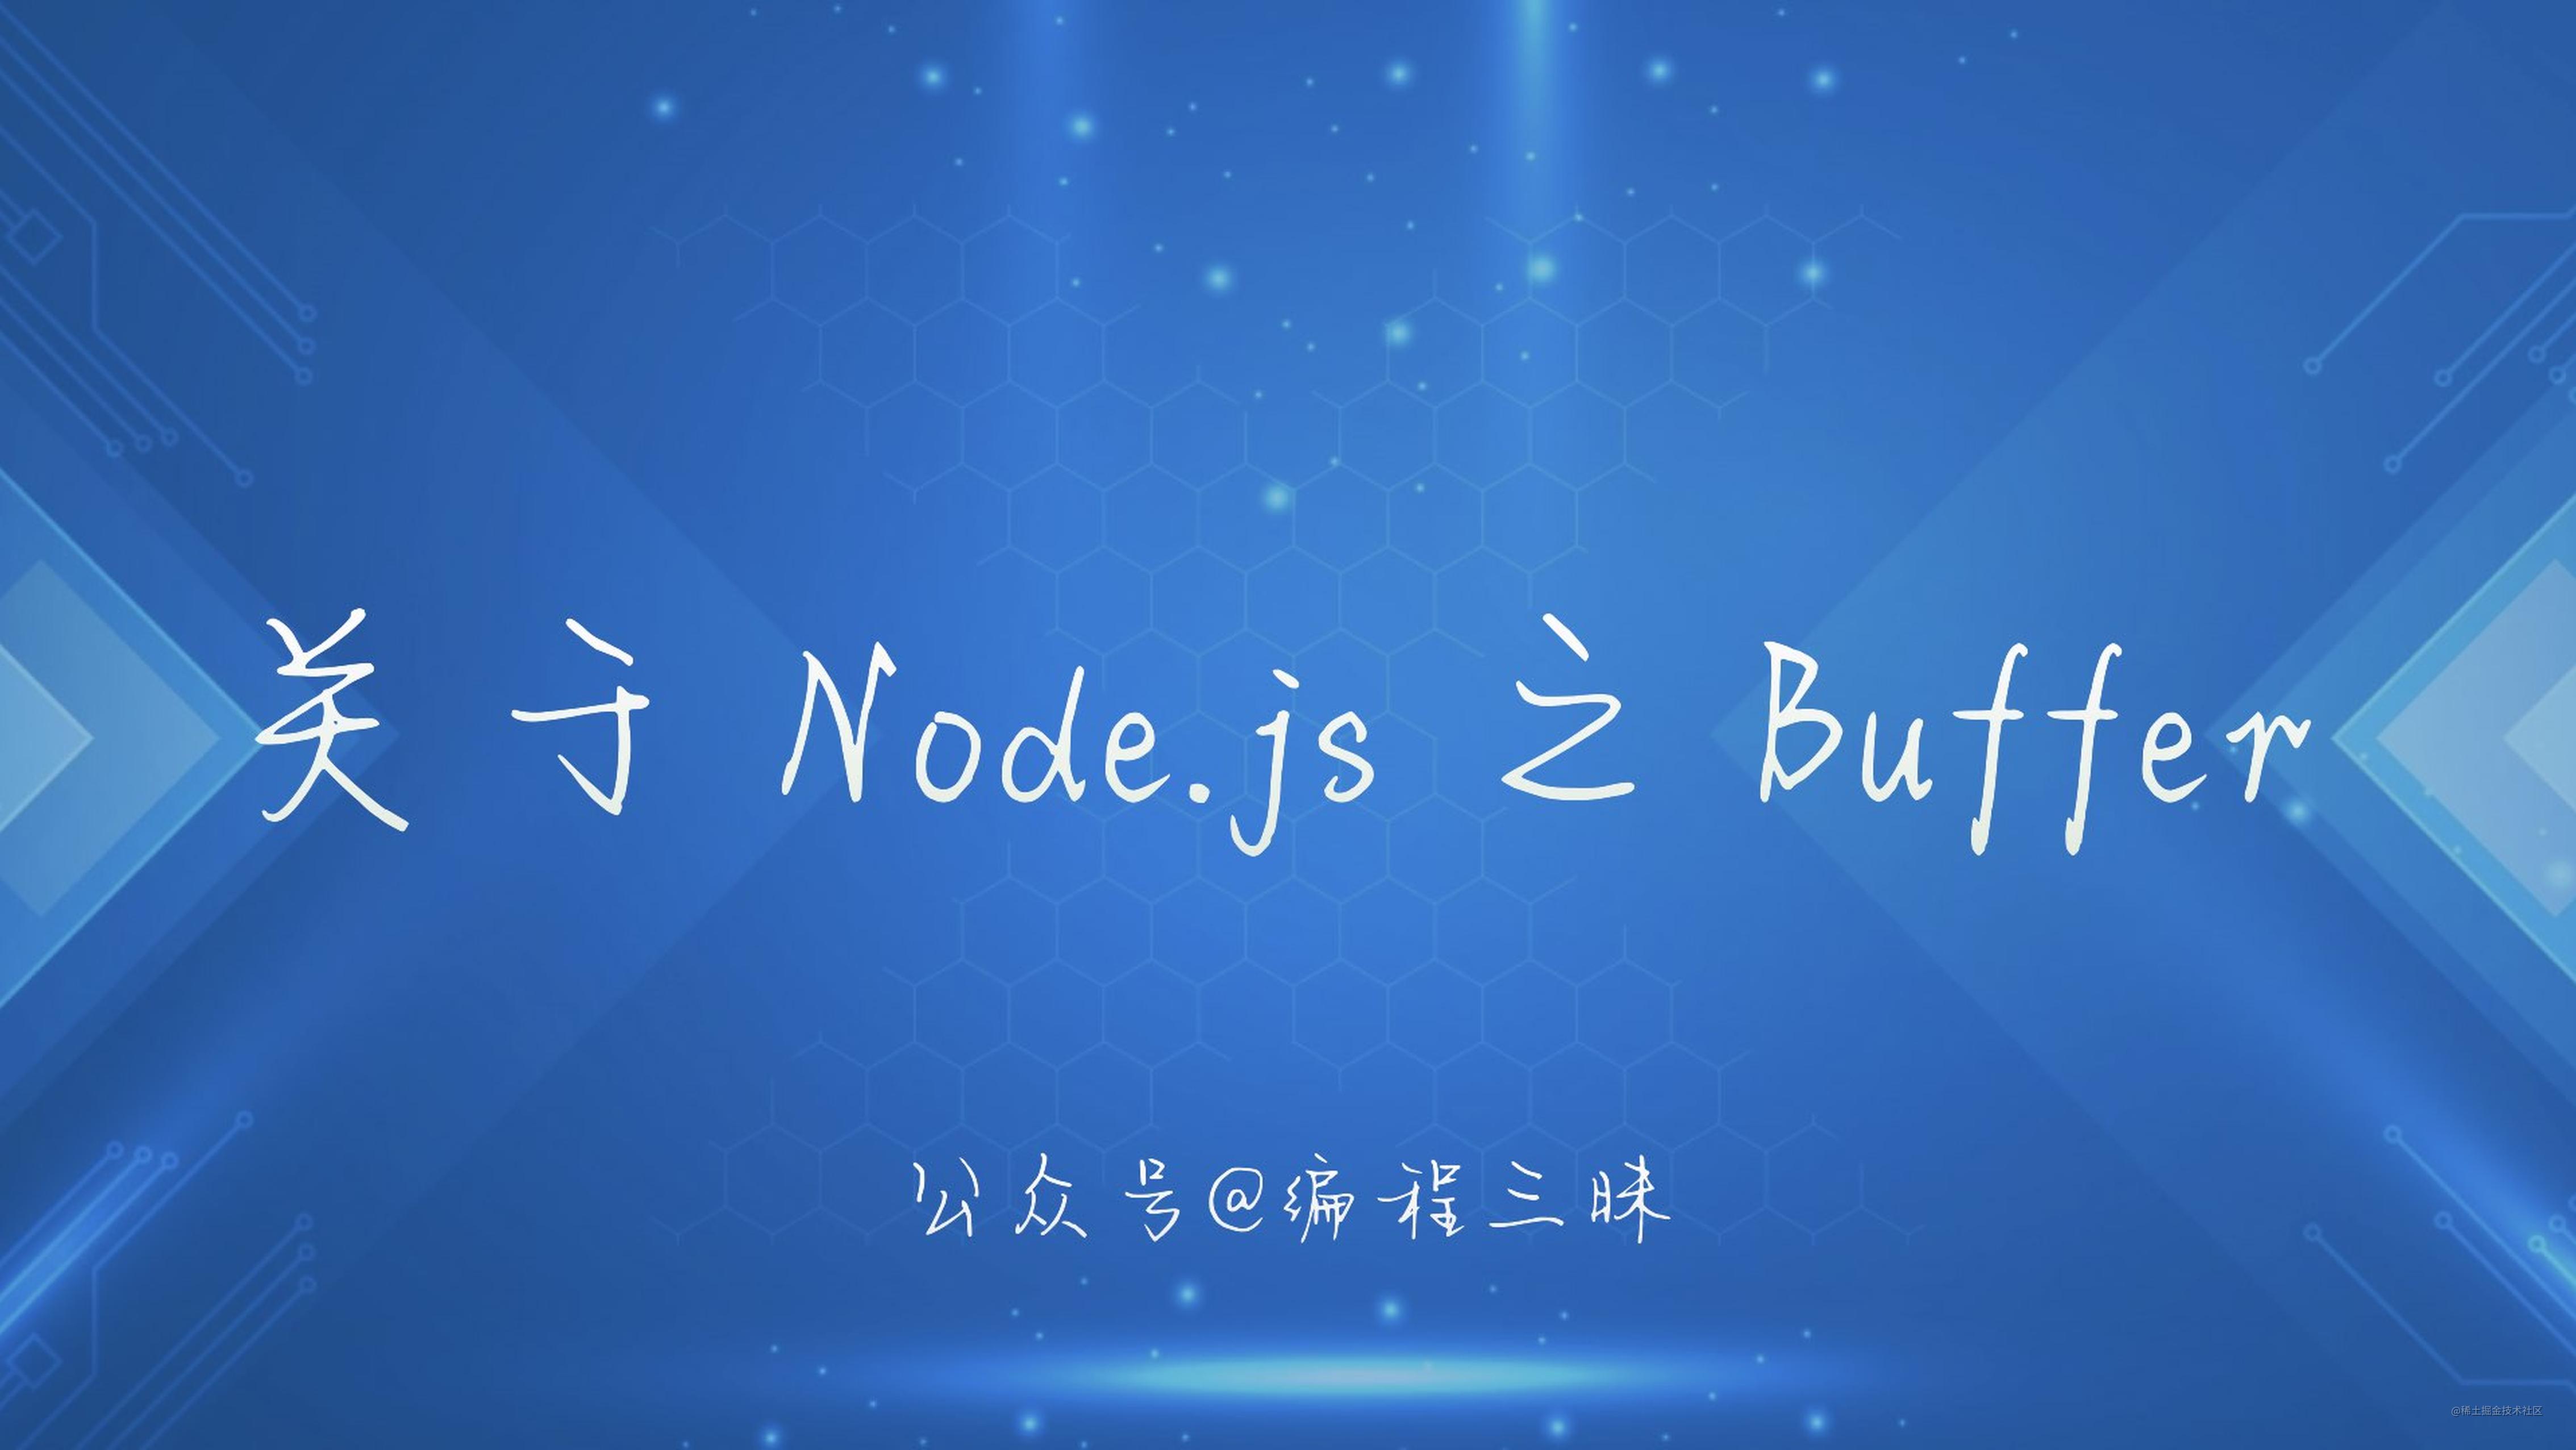 关于 Node.js 之 Buffer